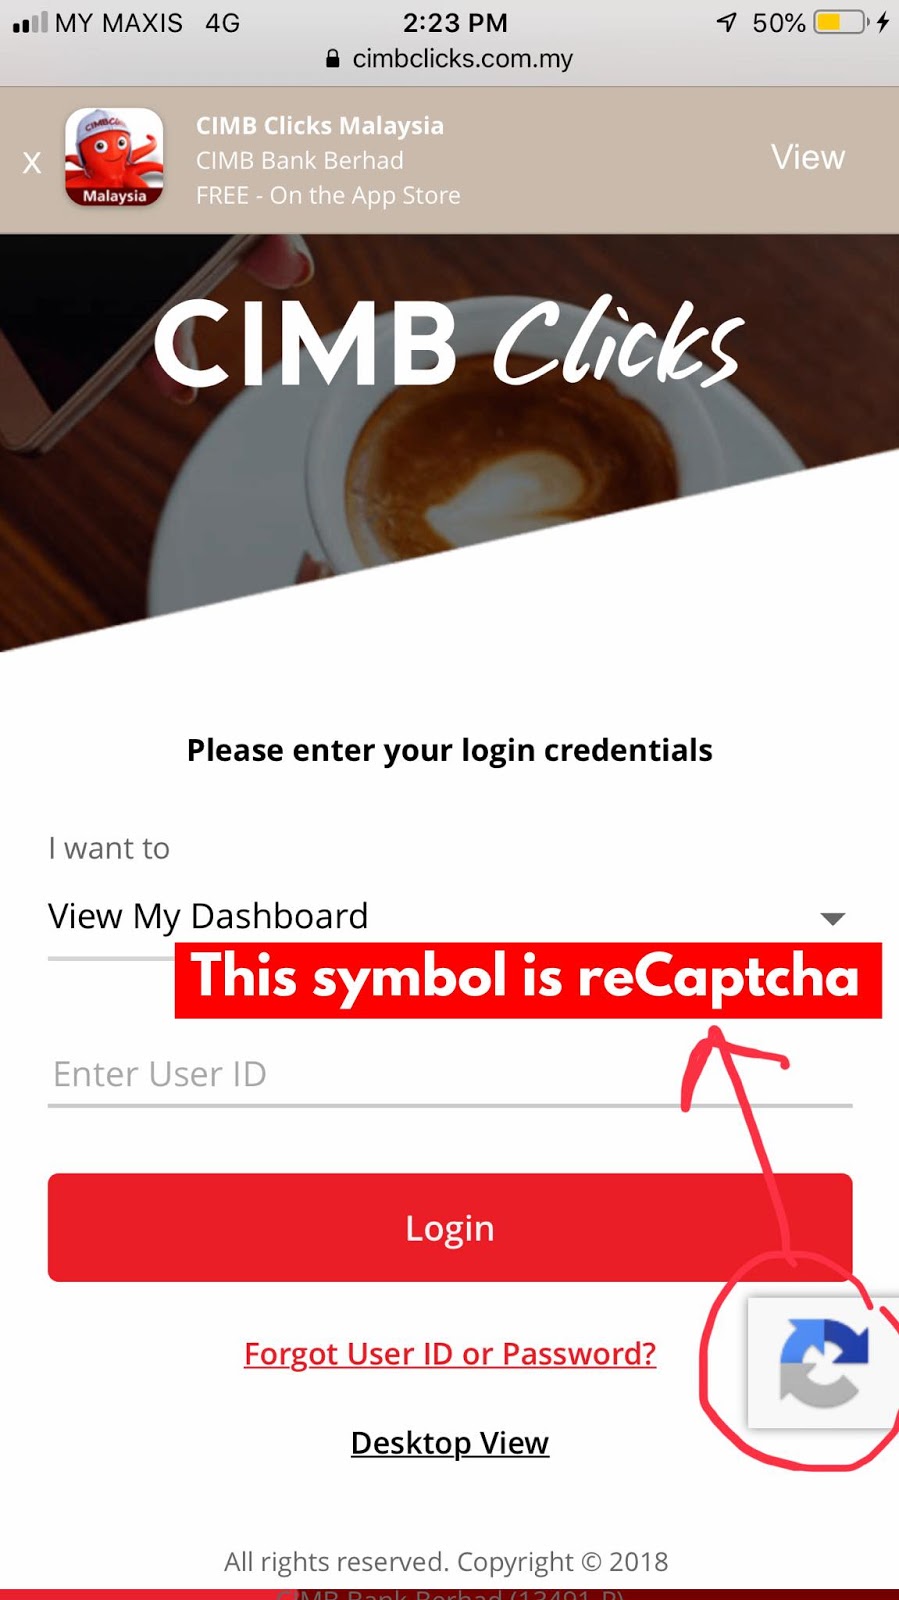 cimbclicks added security via recaptcha